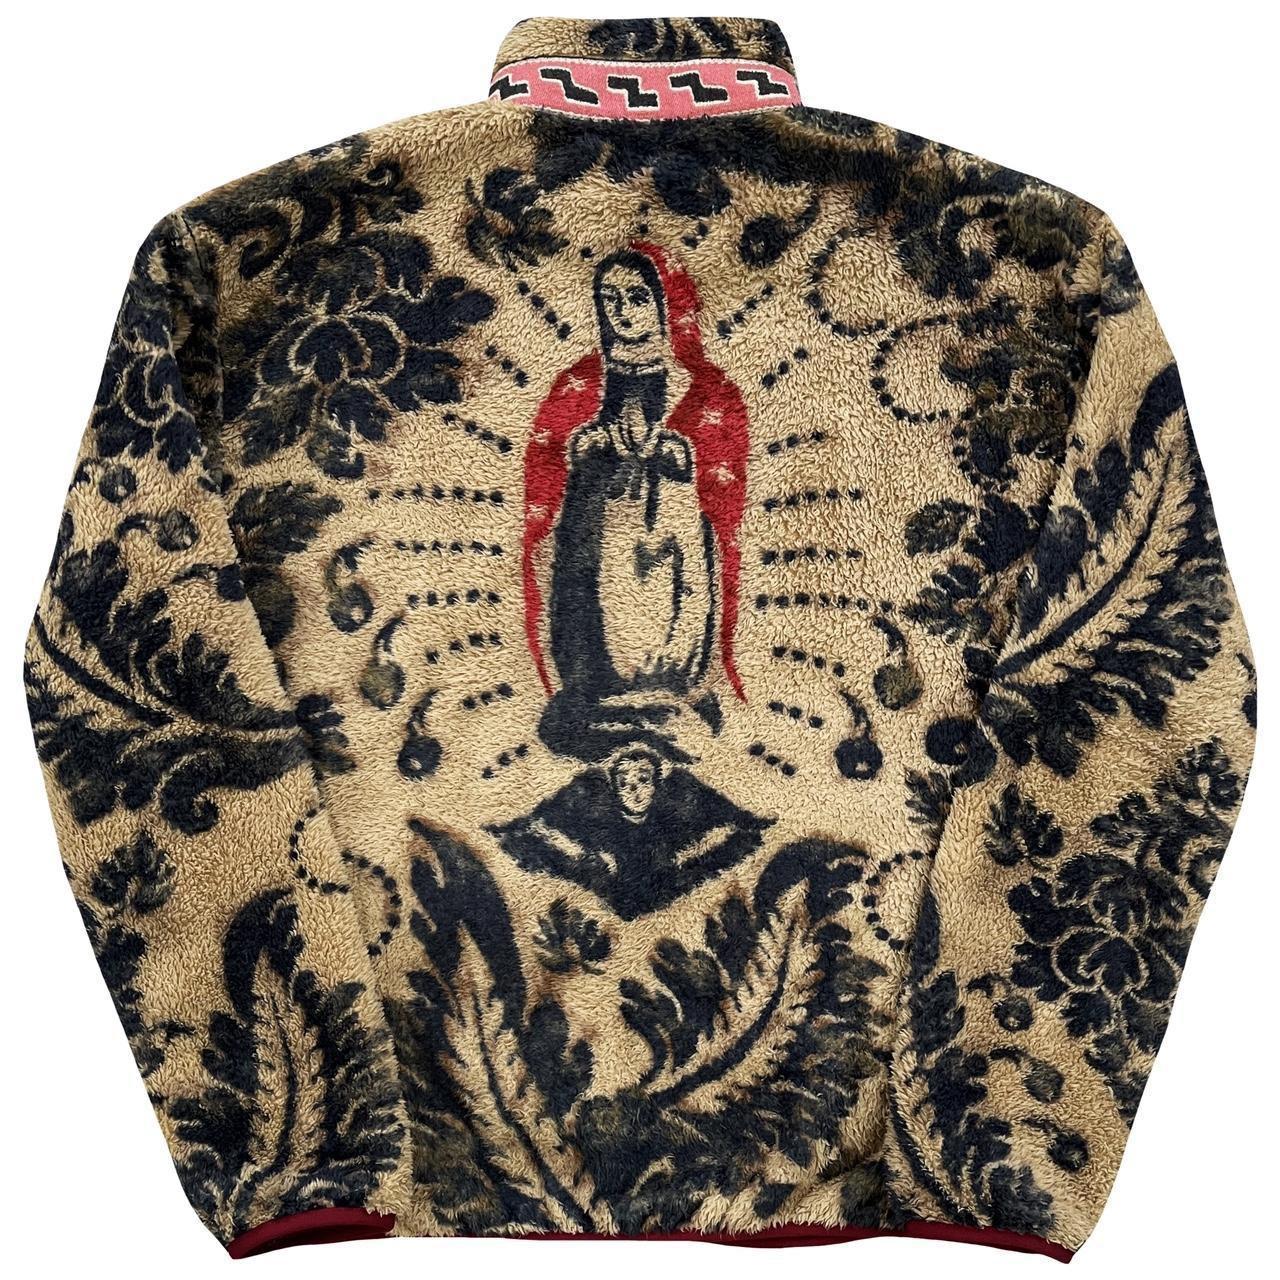 Kapital Damask Virgin Mary Fleece Jacket